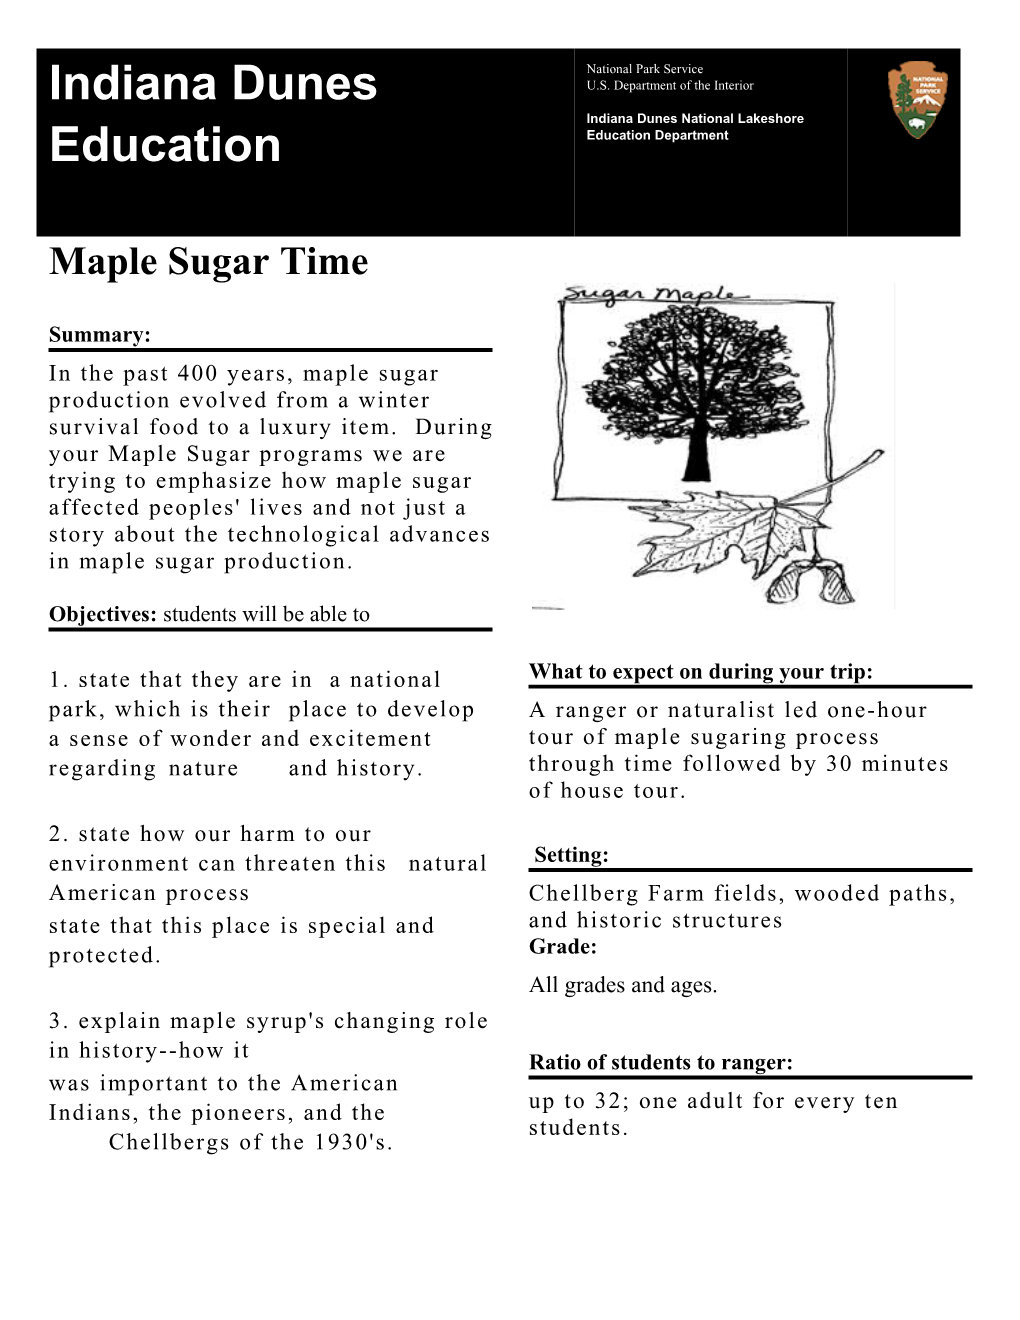 Maple Sugar Time